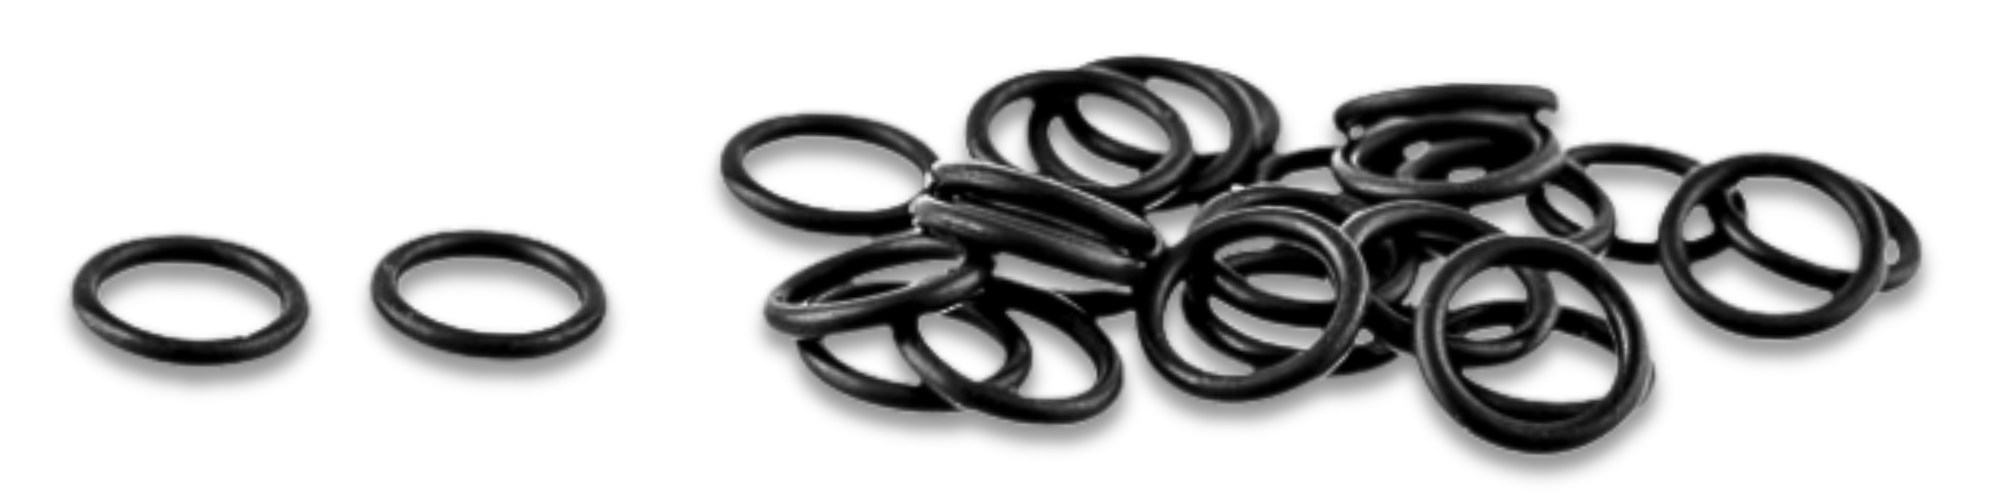 Pile of black o-rings